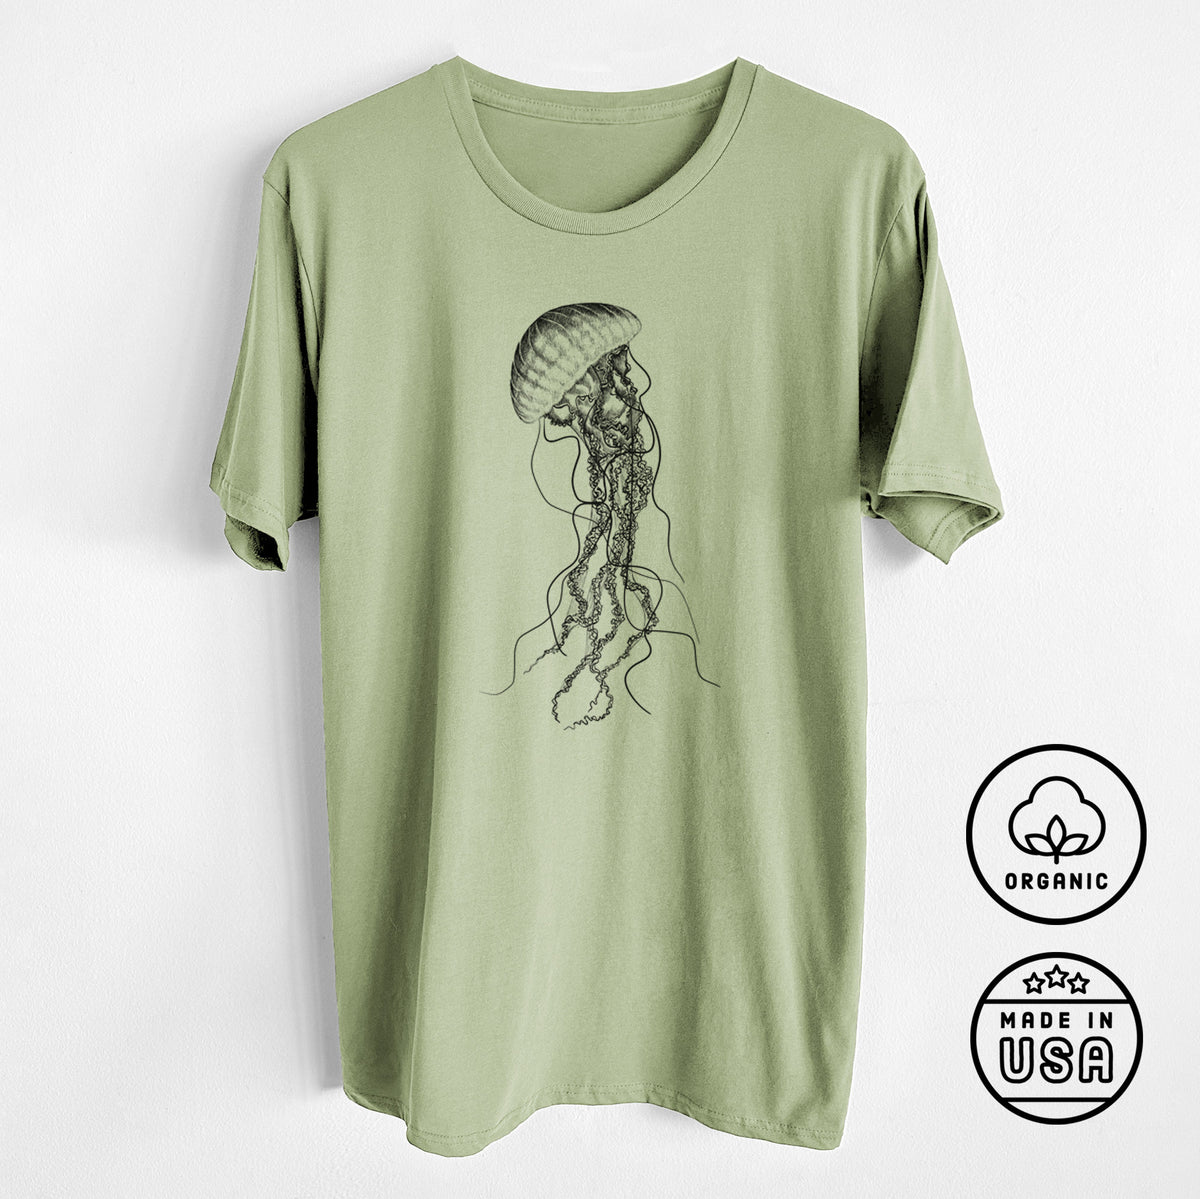 Black Sea Nettle Jellyfish - Chrysaora achlyos - Unisex Crewneck - Made in USA - 100% Organic Cotton